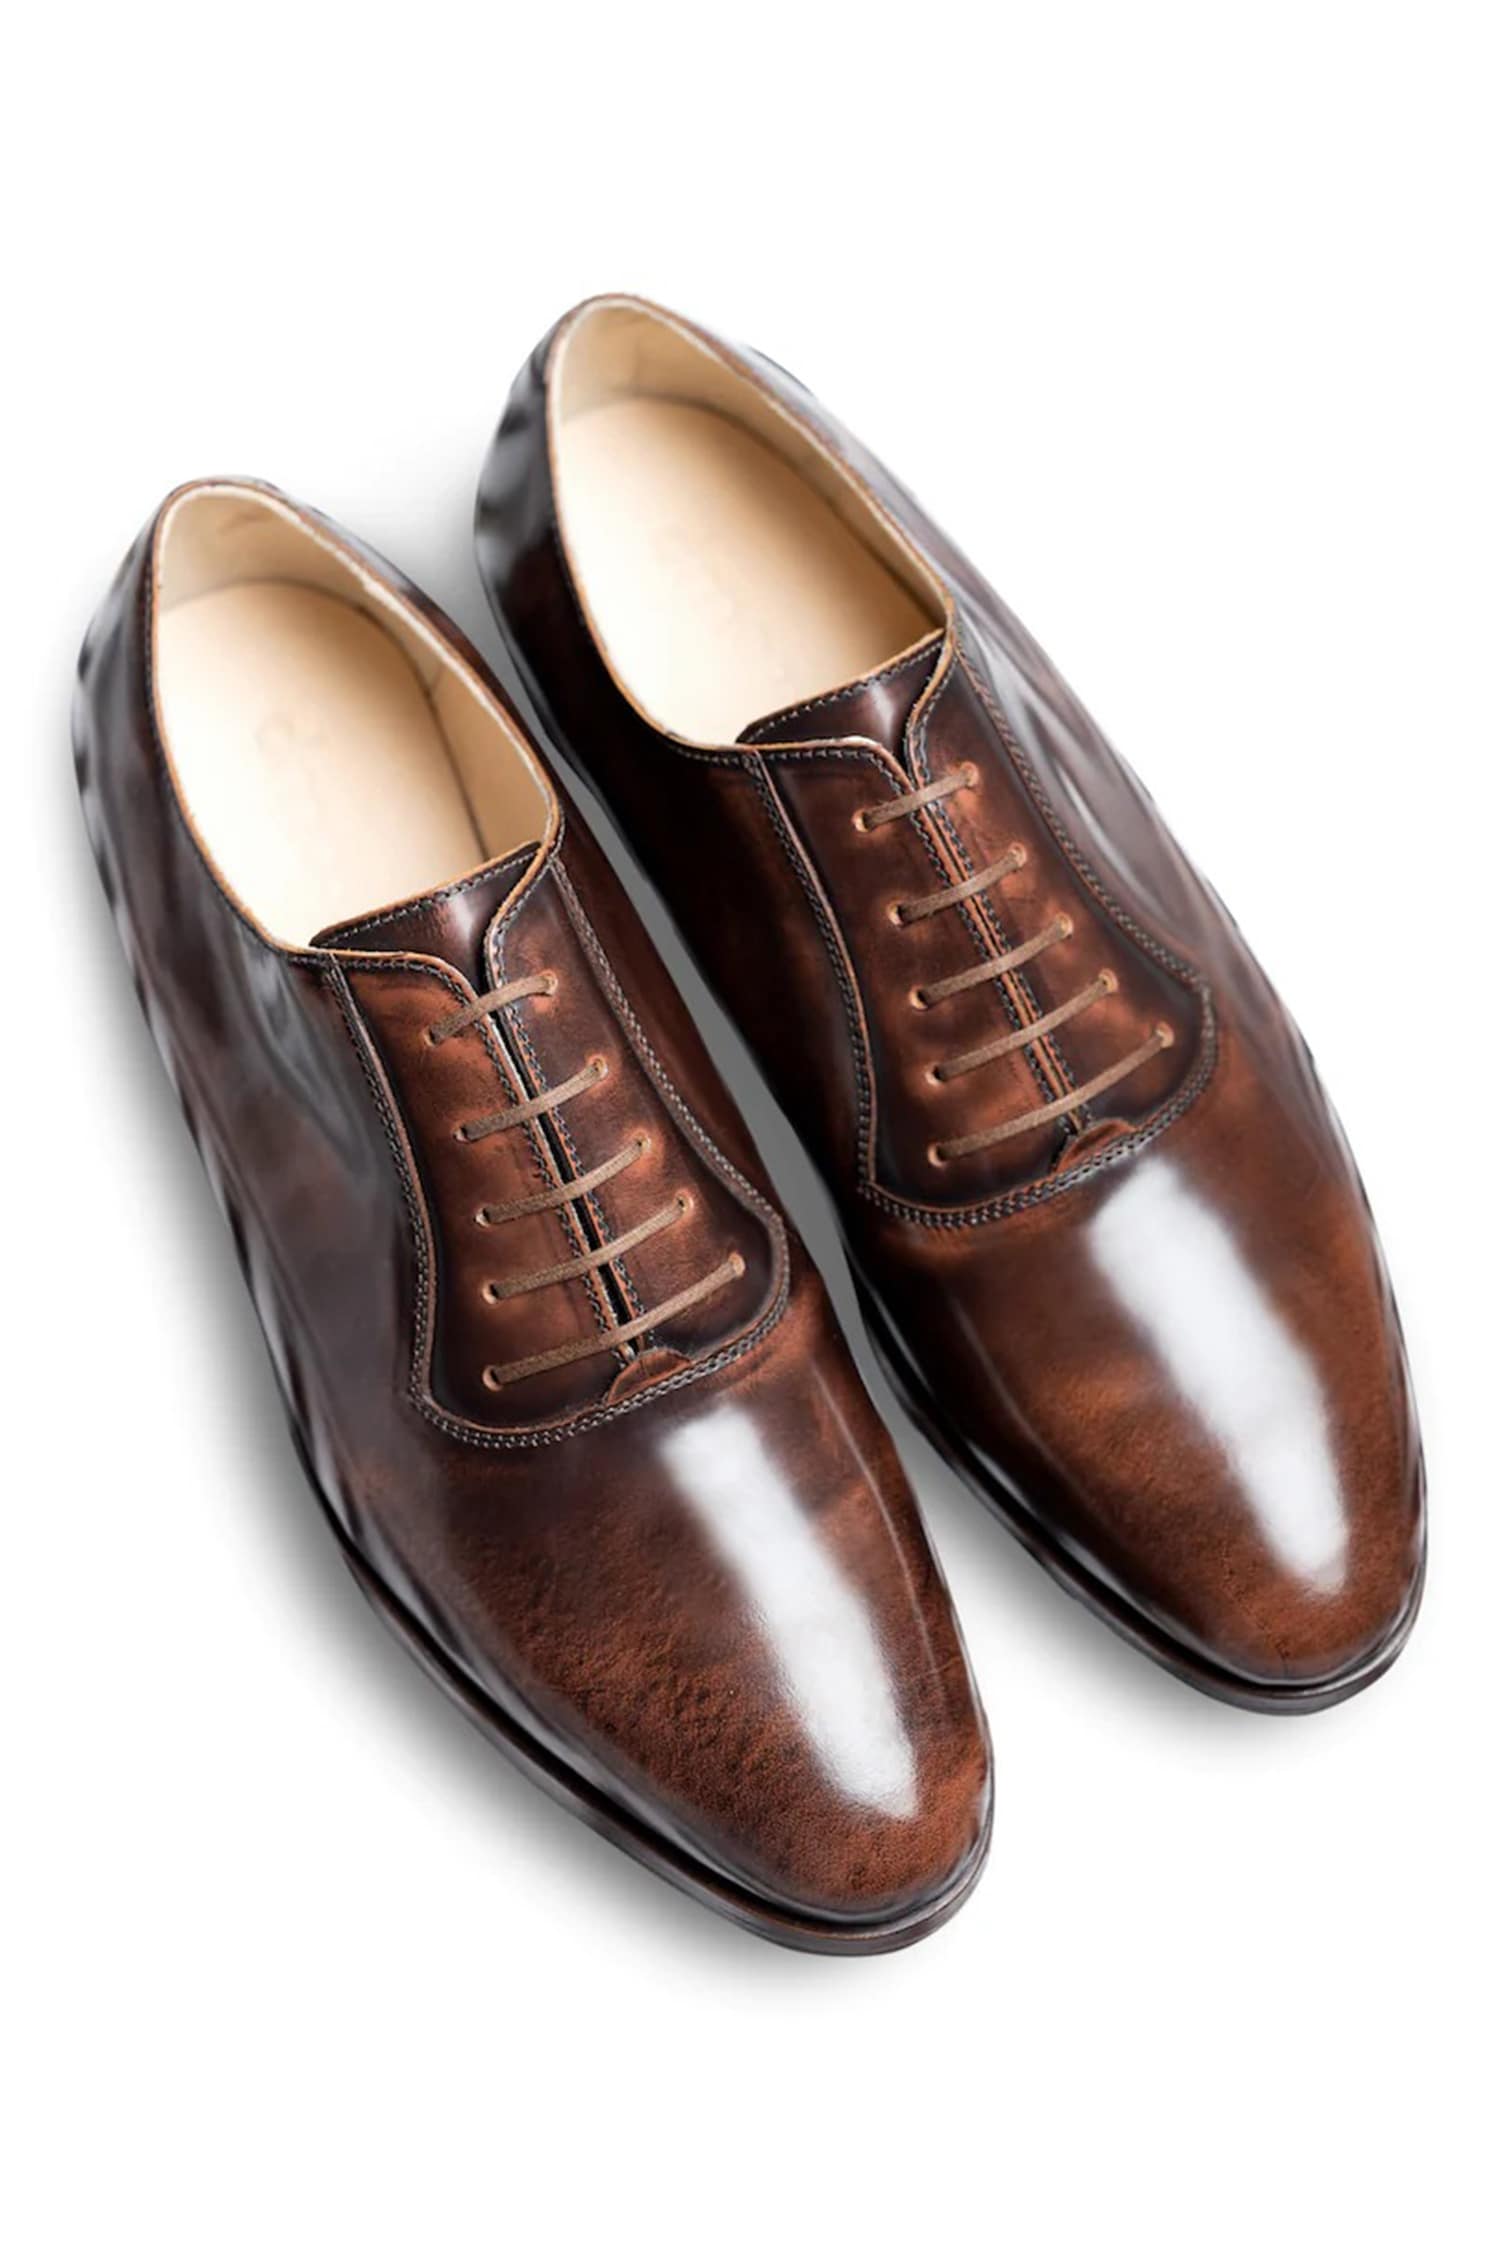 Dmodot Brown Leather Ferraro Bruno Oxford Shoes